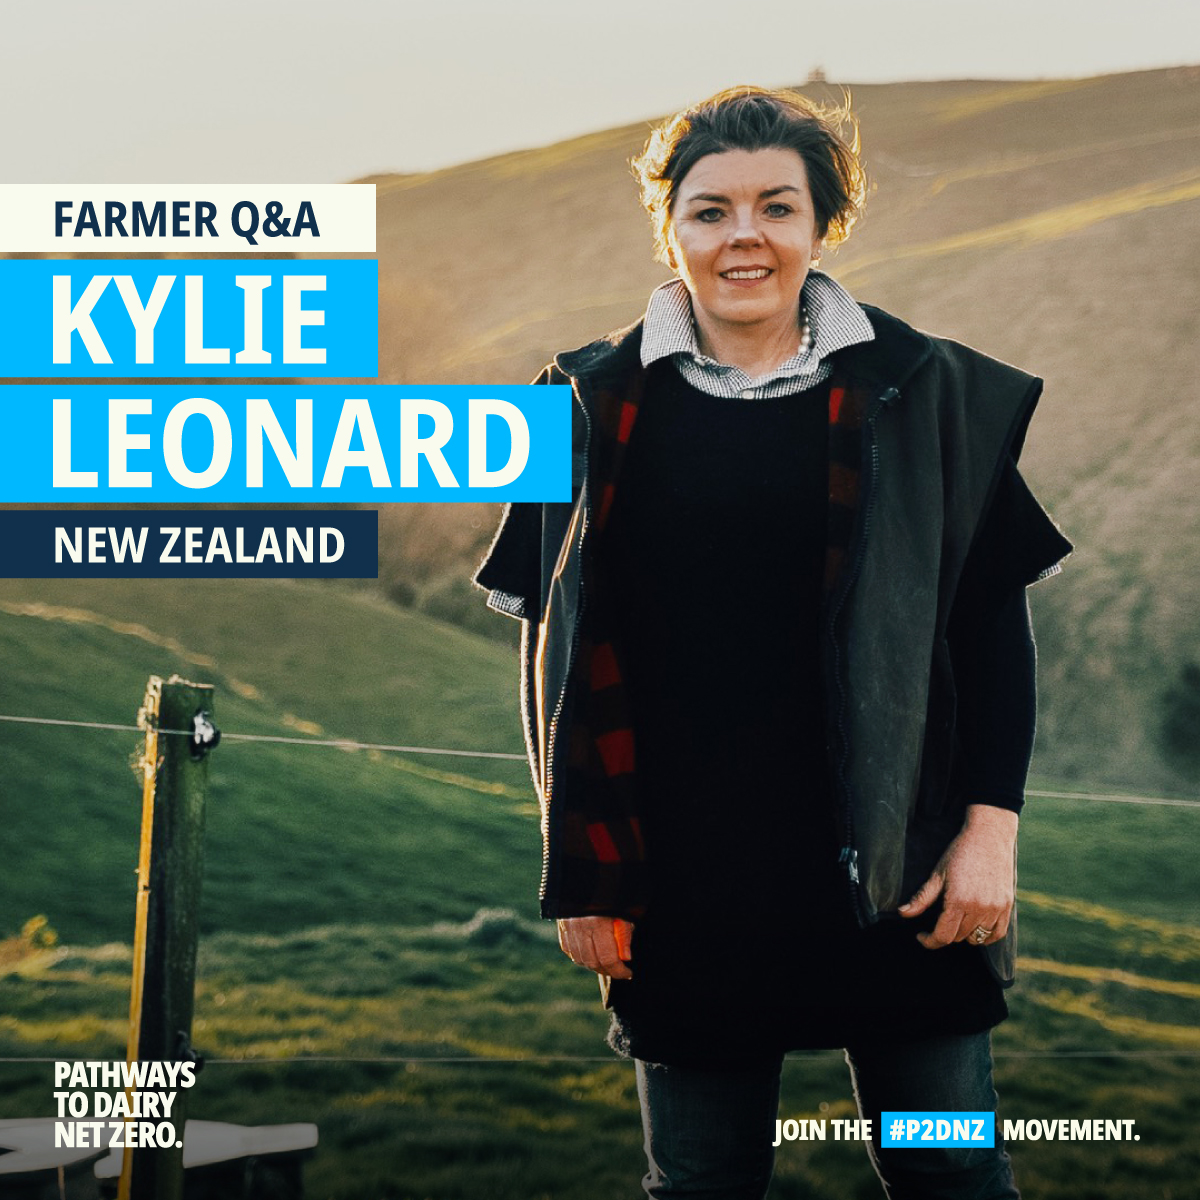 New Zealand farmer Kylie Leonard is proof that #PathwaysToDairyNetZero helps #dairy organizations
on their #sustainability journeys. Read Kylie’s story at pathwaystodairynetzero.org/news/farmer-qa…. 
#P2DNZ #EnjoyDairy